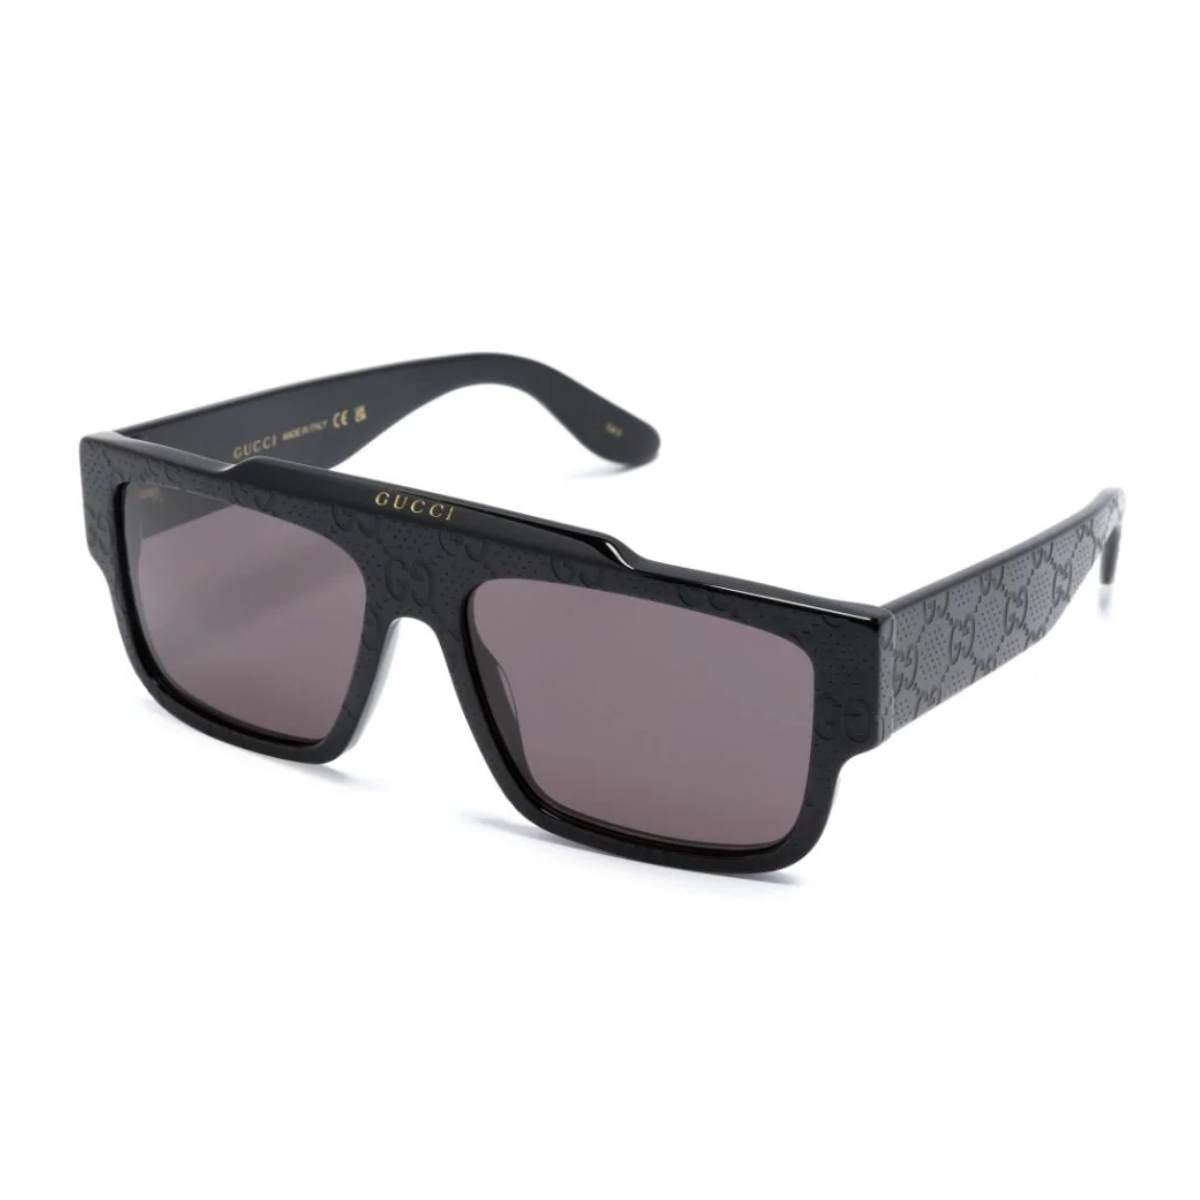 "Shop Stylish Gucci GG1460S 006 UV Protection Sunglass For Men's | Optorium"